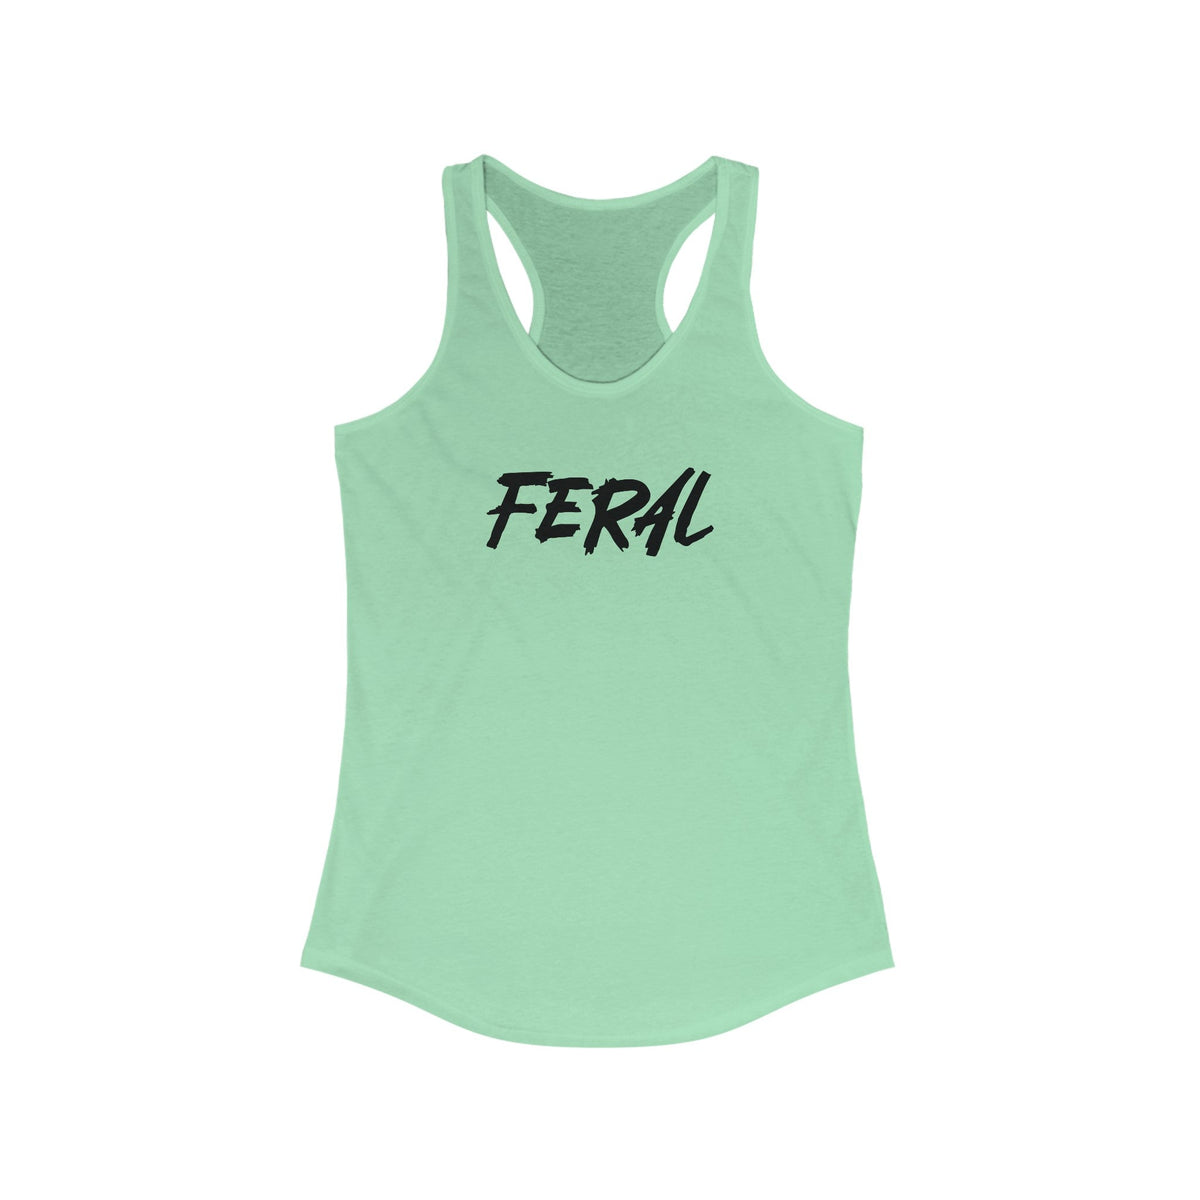 Feral Women's Racerback Tank - Goth Cloth Co.Tank Top26131733886862736261